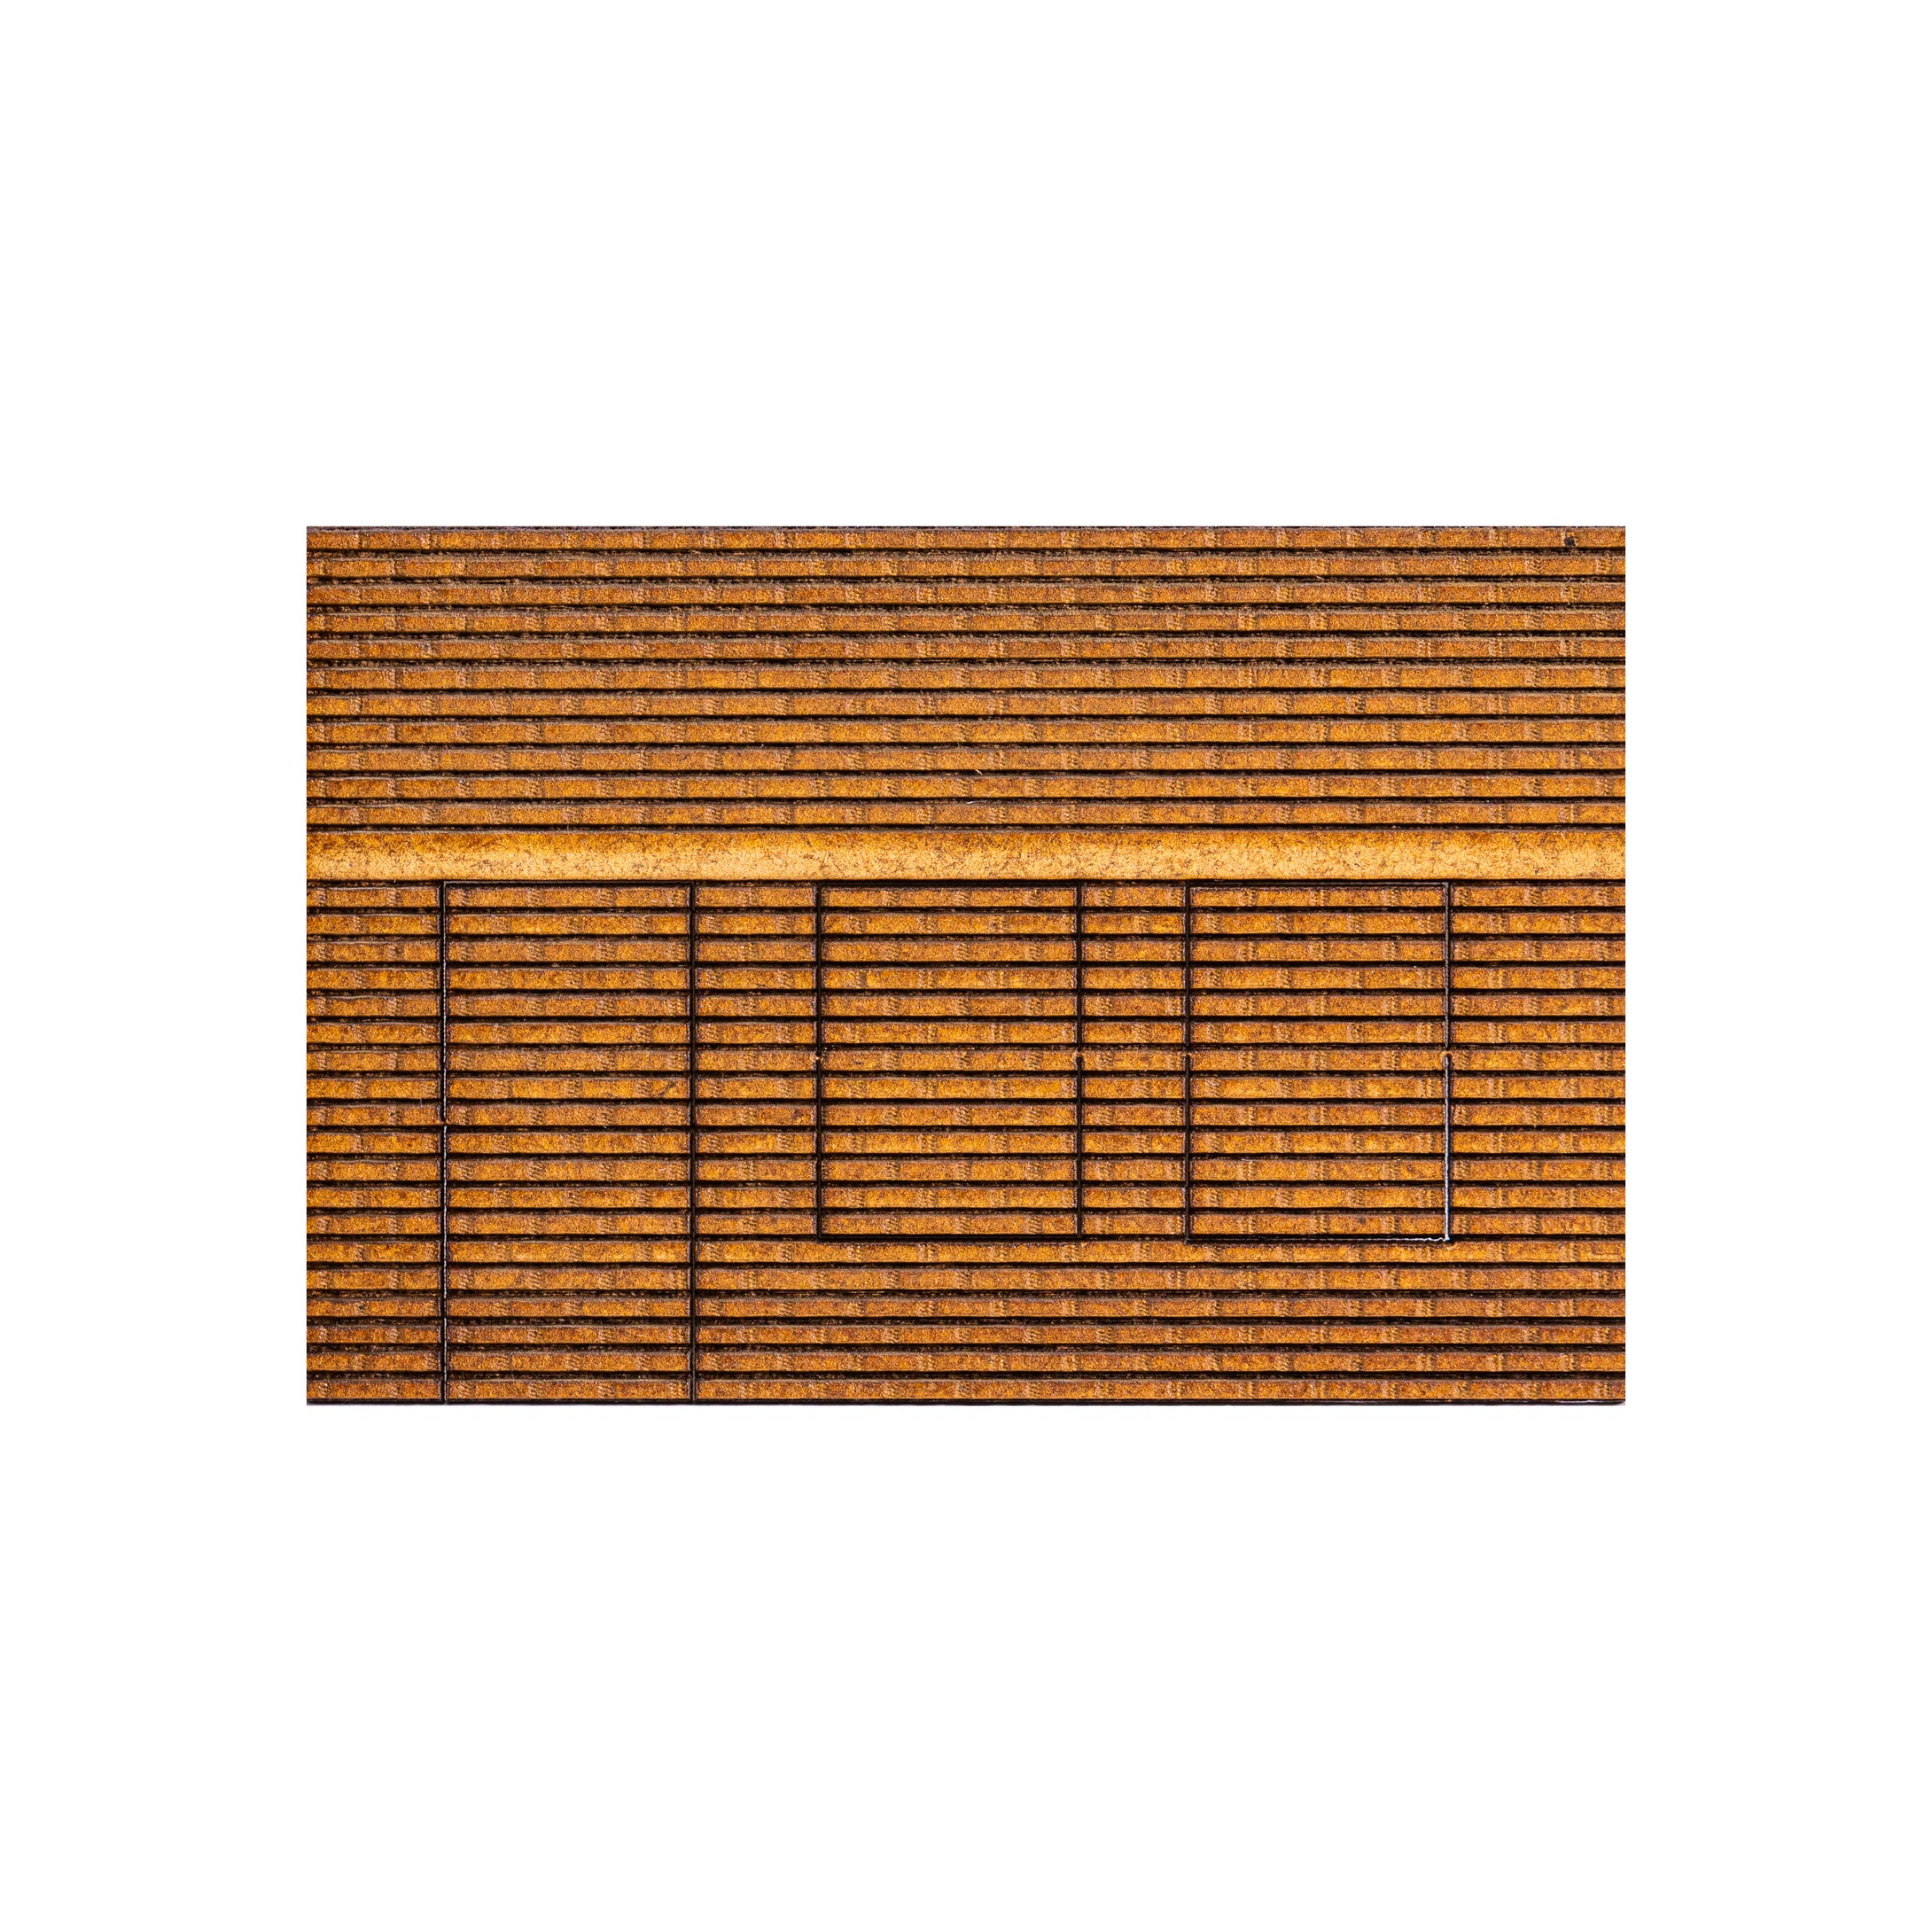 LP030 - HO Scale - Brick panel insert 1 door 2 window openings - fits opening size A